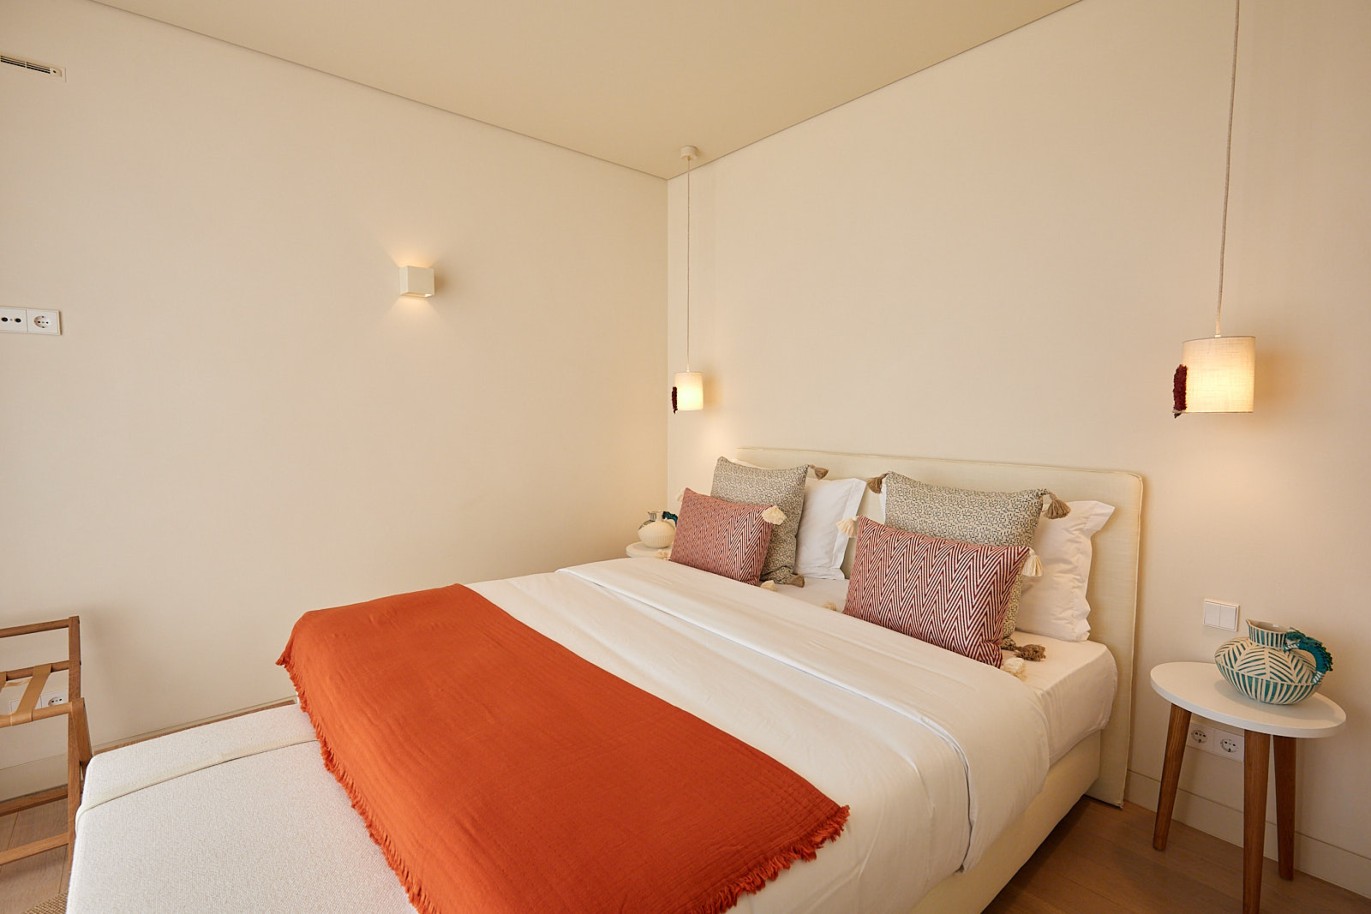 2 bedroom apartment in resort, for sale in Porches, Algarve_229209